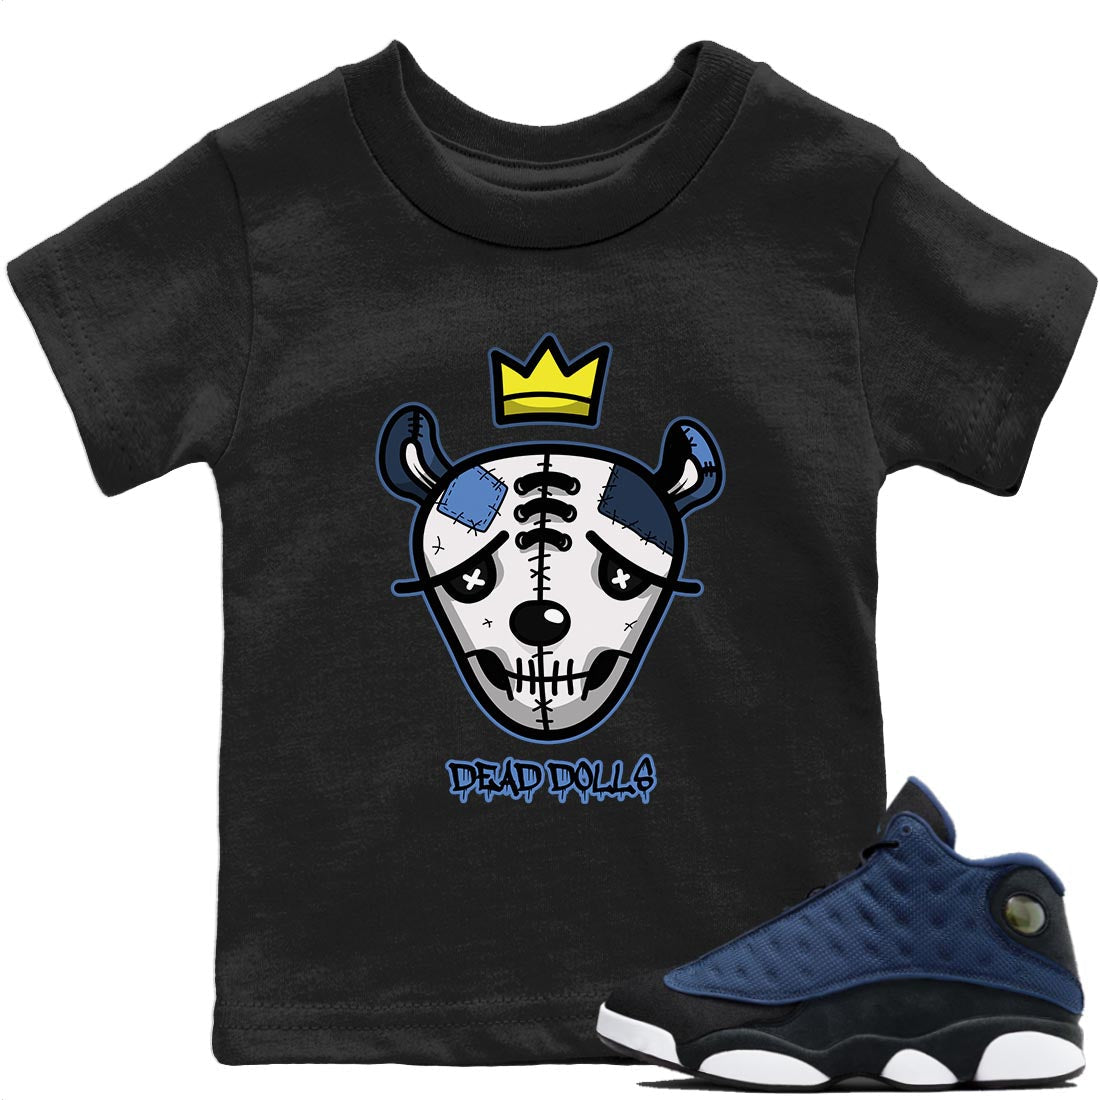 Jordan 13 Brave Blue Sneaker Match Tees Dead Dolls Face Sneaker Tees Jordan 13 Brave Blue Sneaker Release Tees Kids Shirts